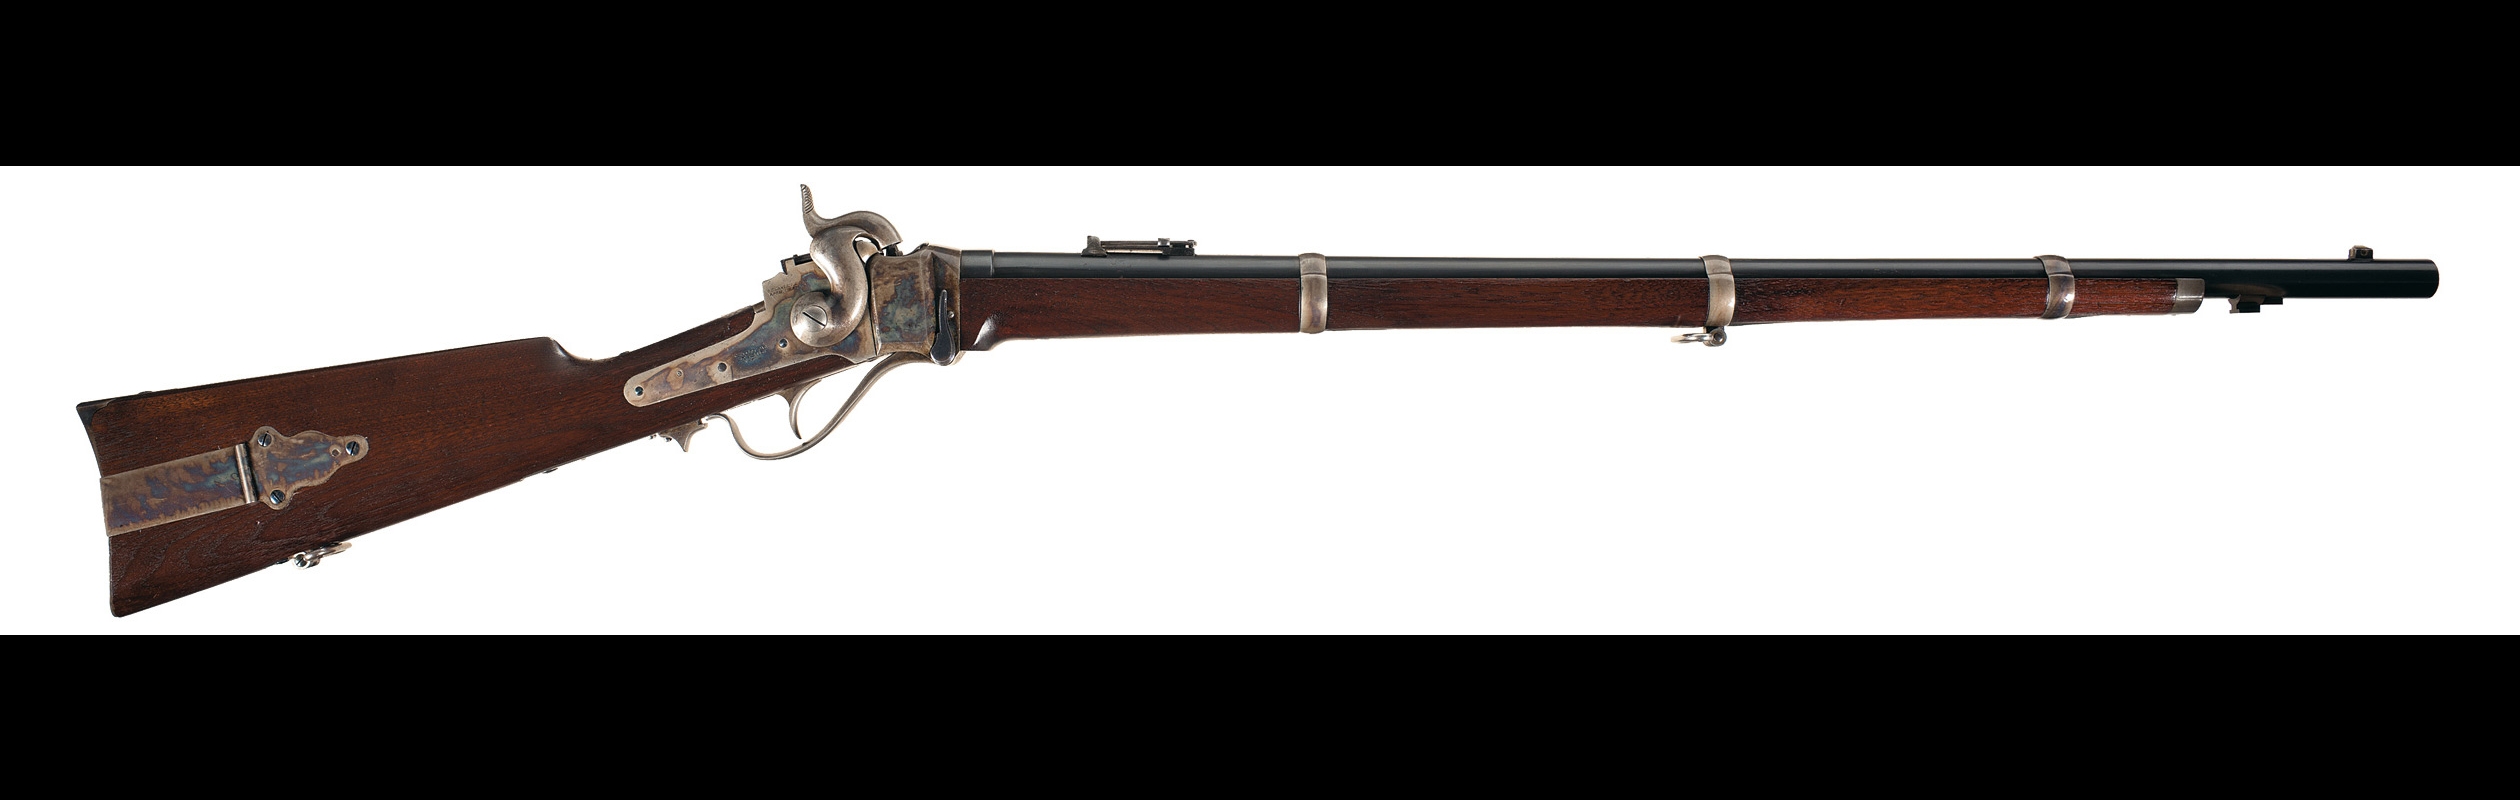 Sharps 1863 Rifle #3